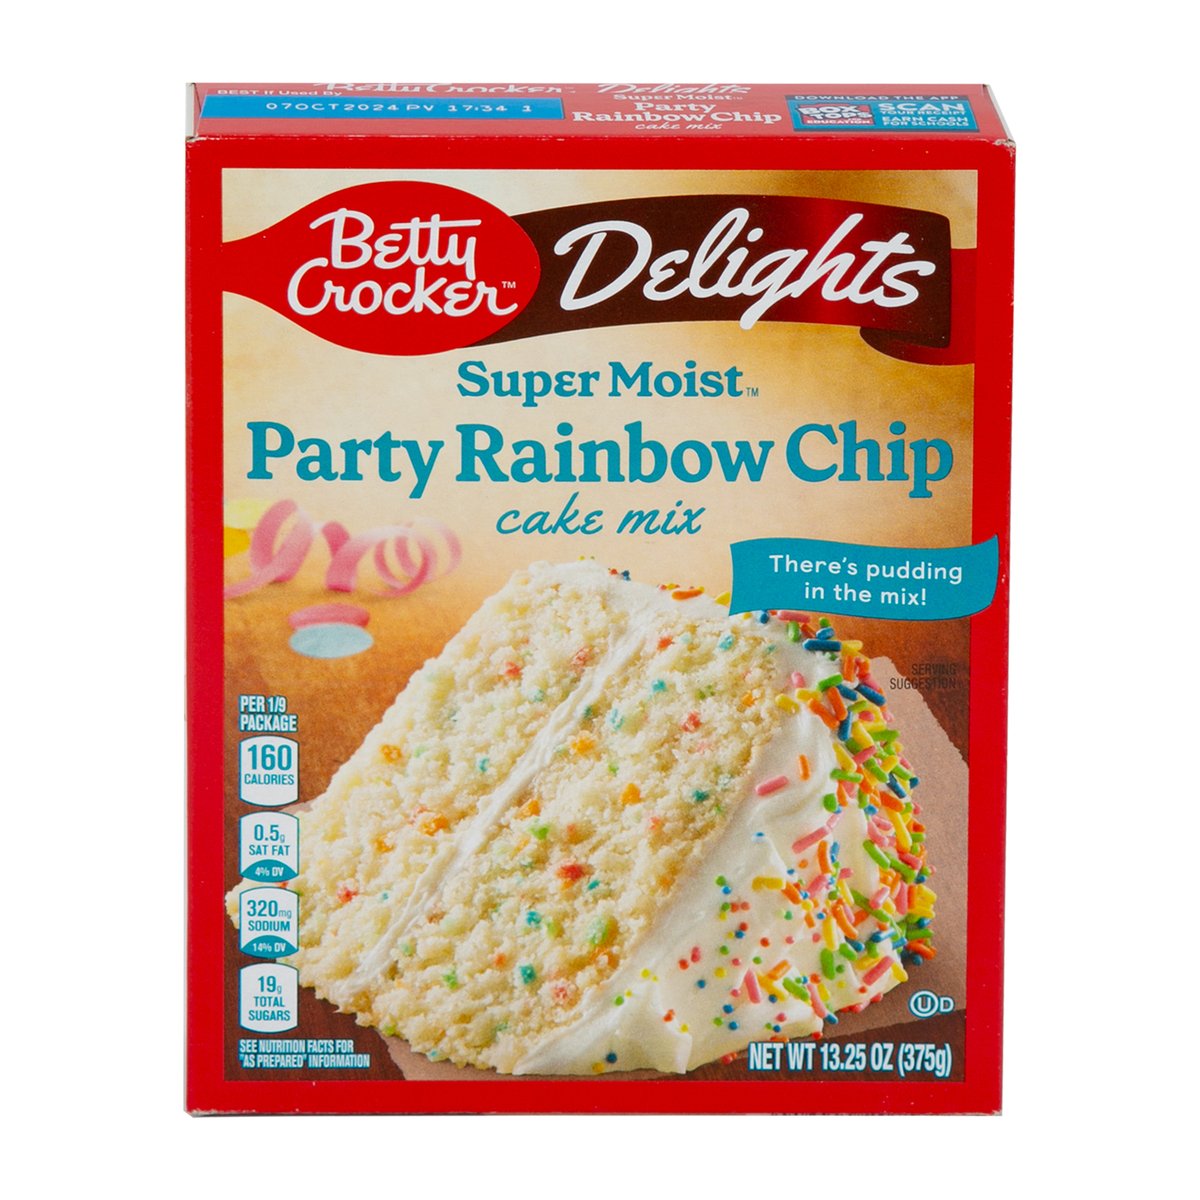 Betty Crocker Delights Super Moist Party Rainbow Chip Cake Mix 375 g